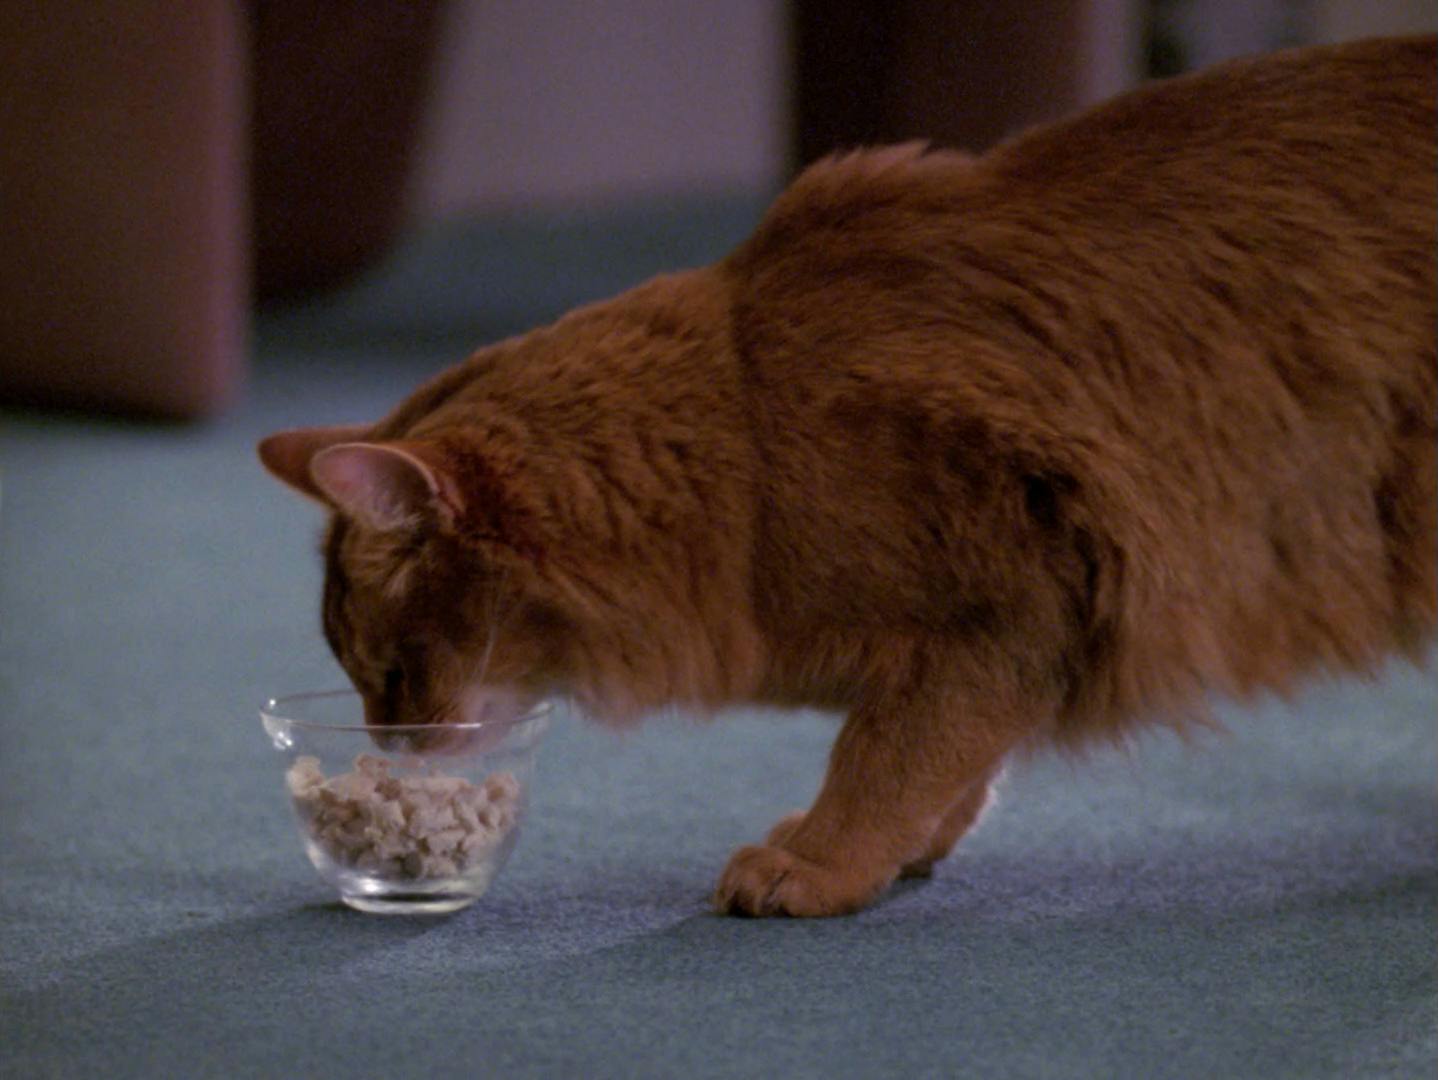 Spot eats his feline supplement 74 in 'Data's Day'